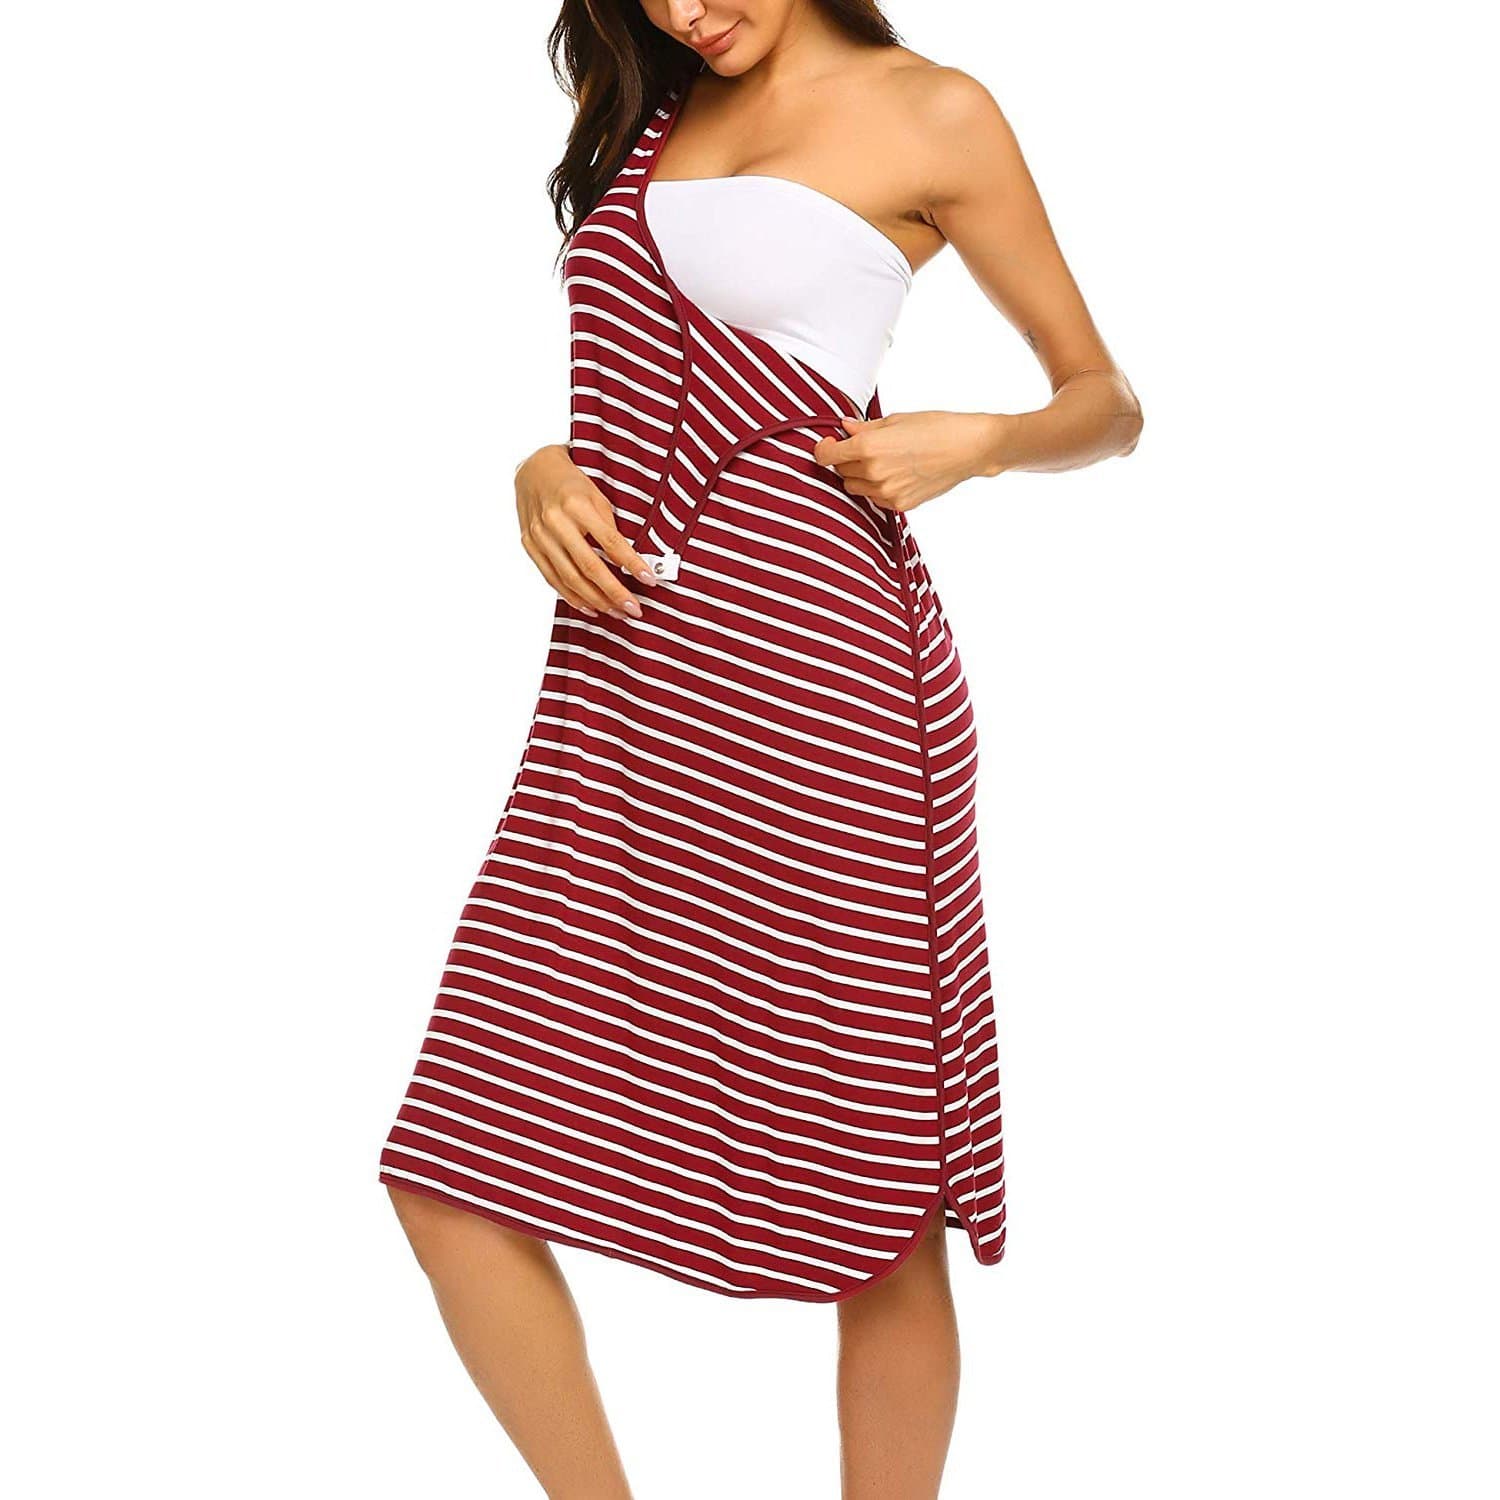 Sassy Striped Sleeveless Nursing Dress